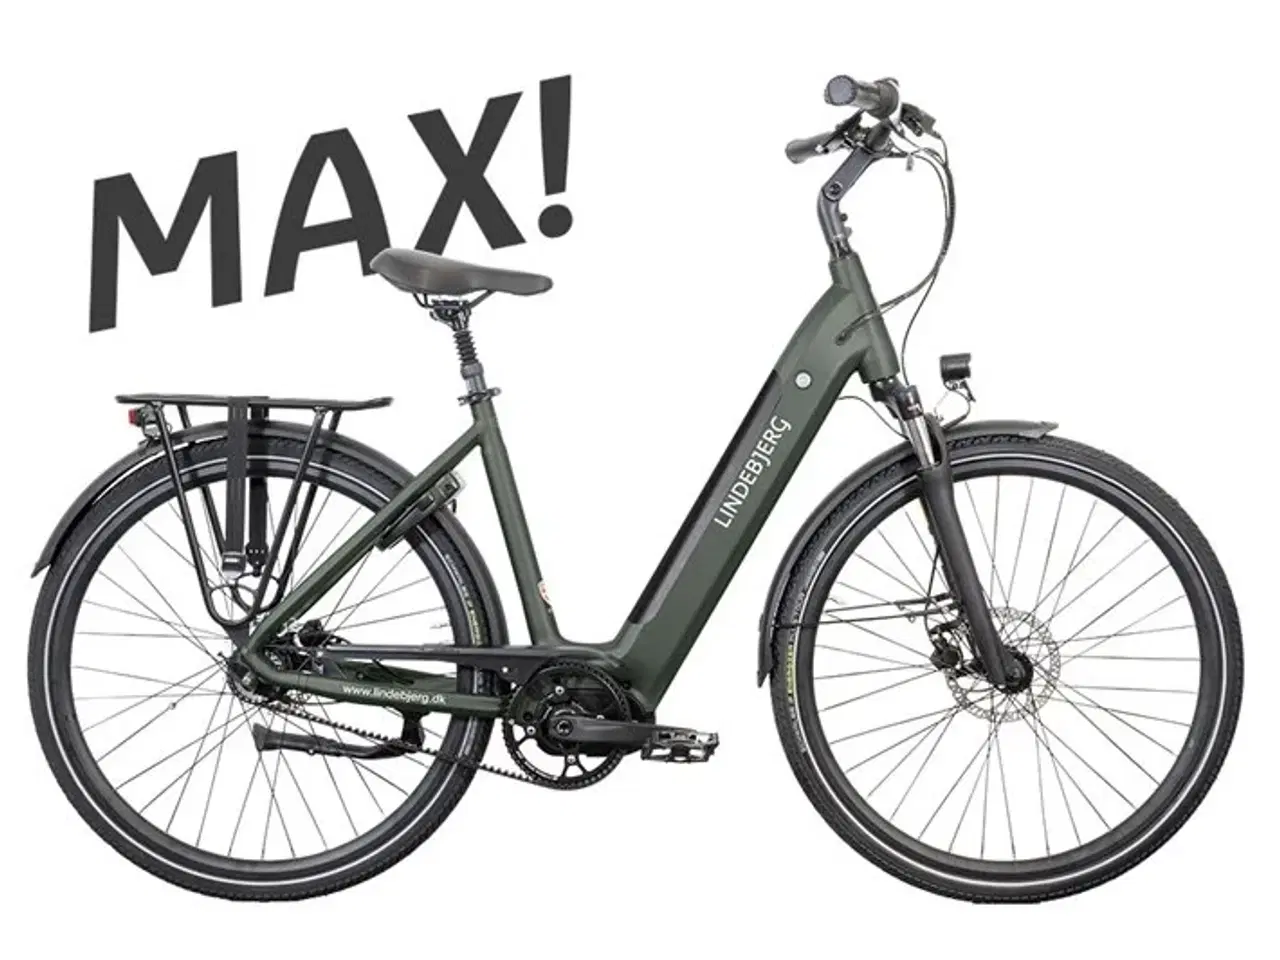 Billede 1 - Lindebjerg 28'' Elcykel Center Royal MAX - Mat grøn